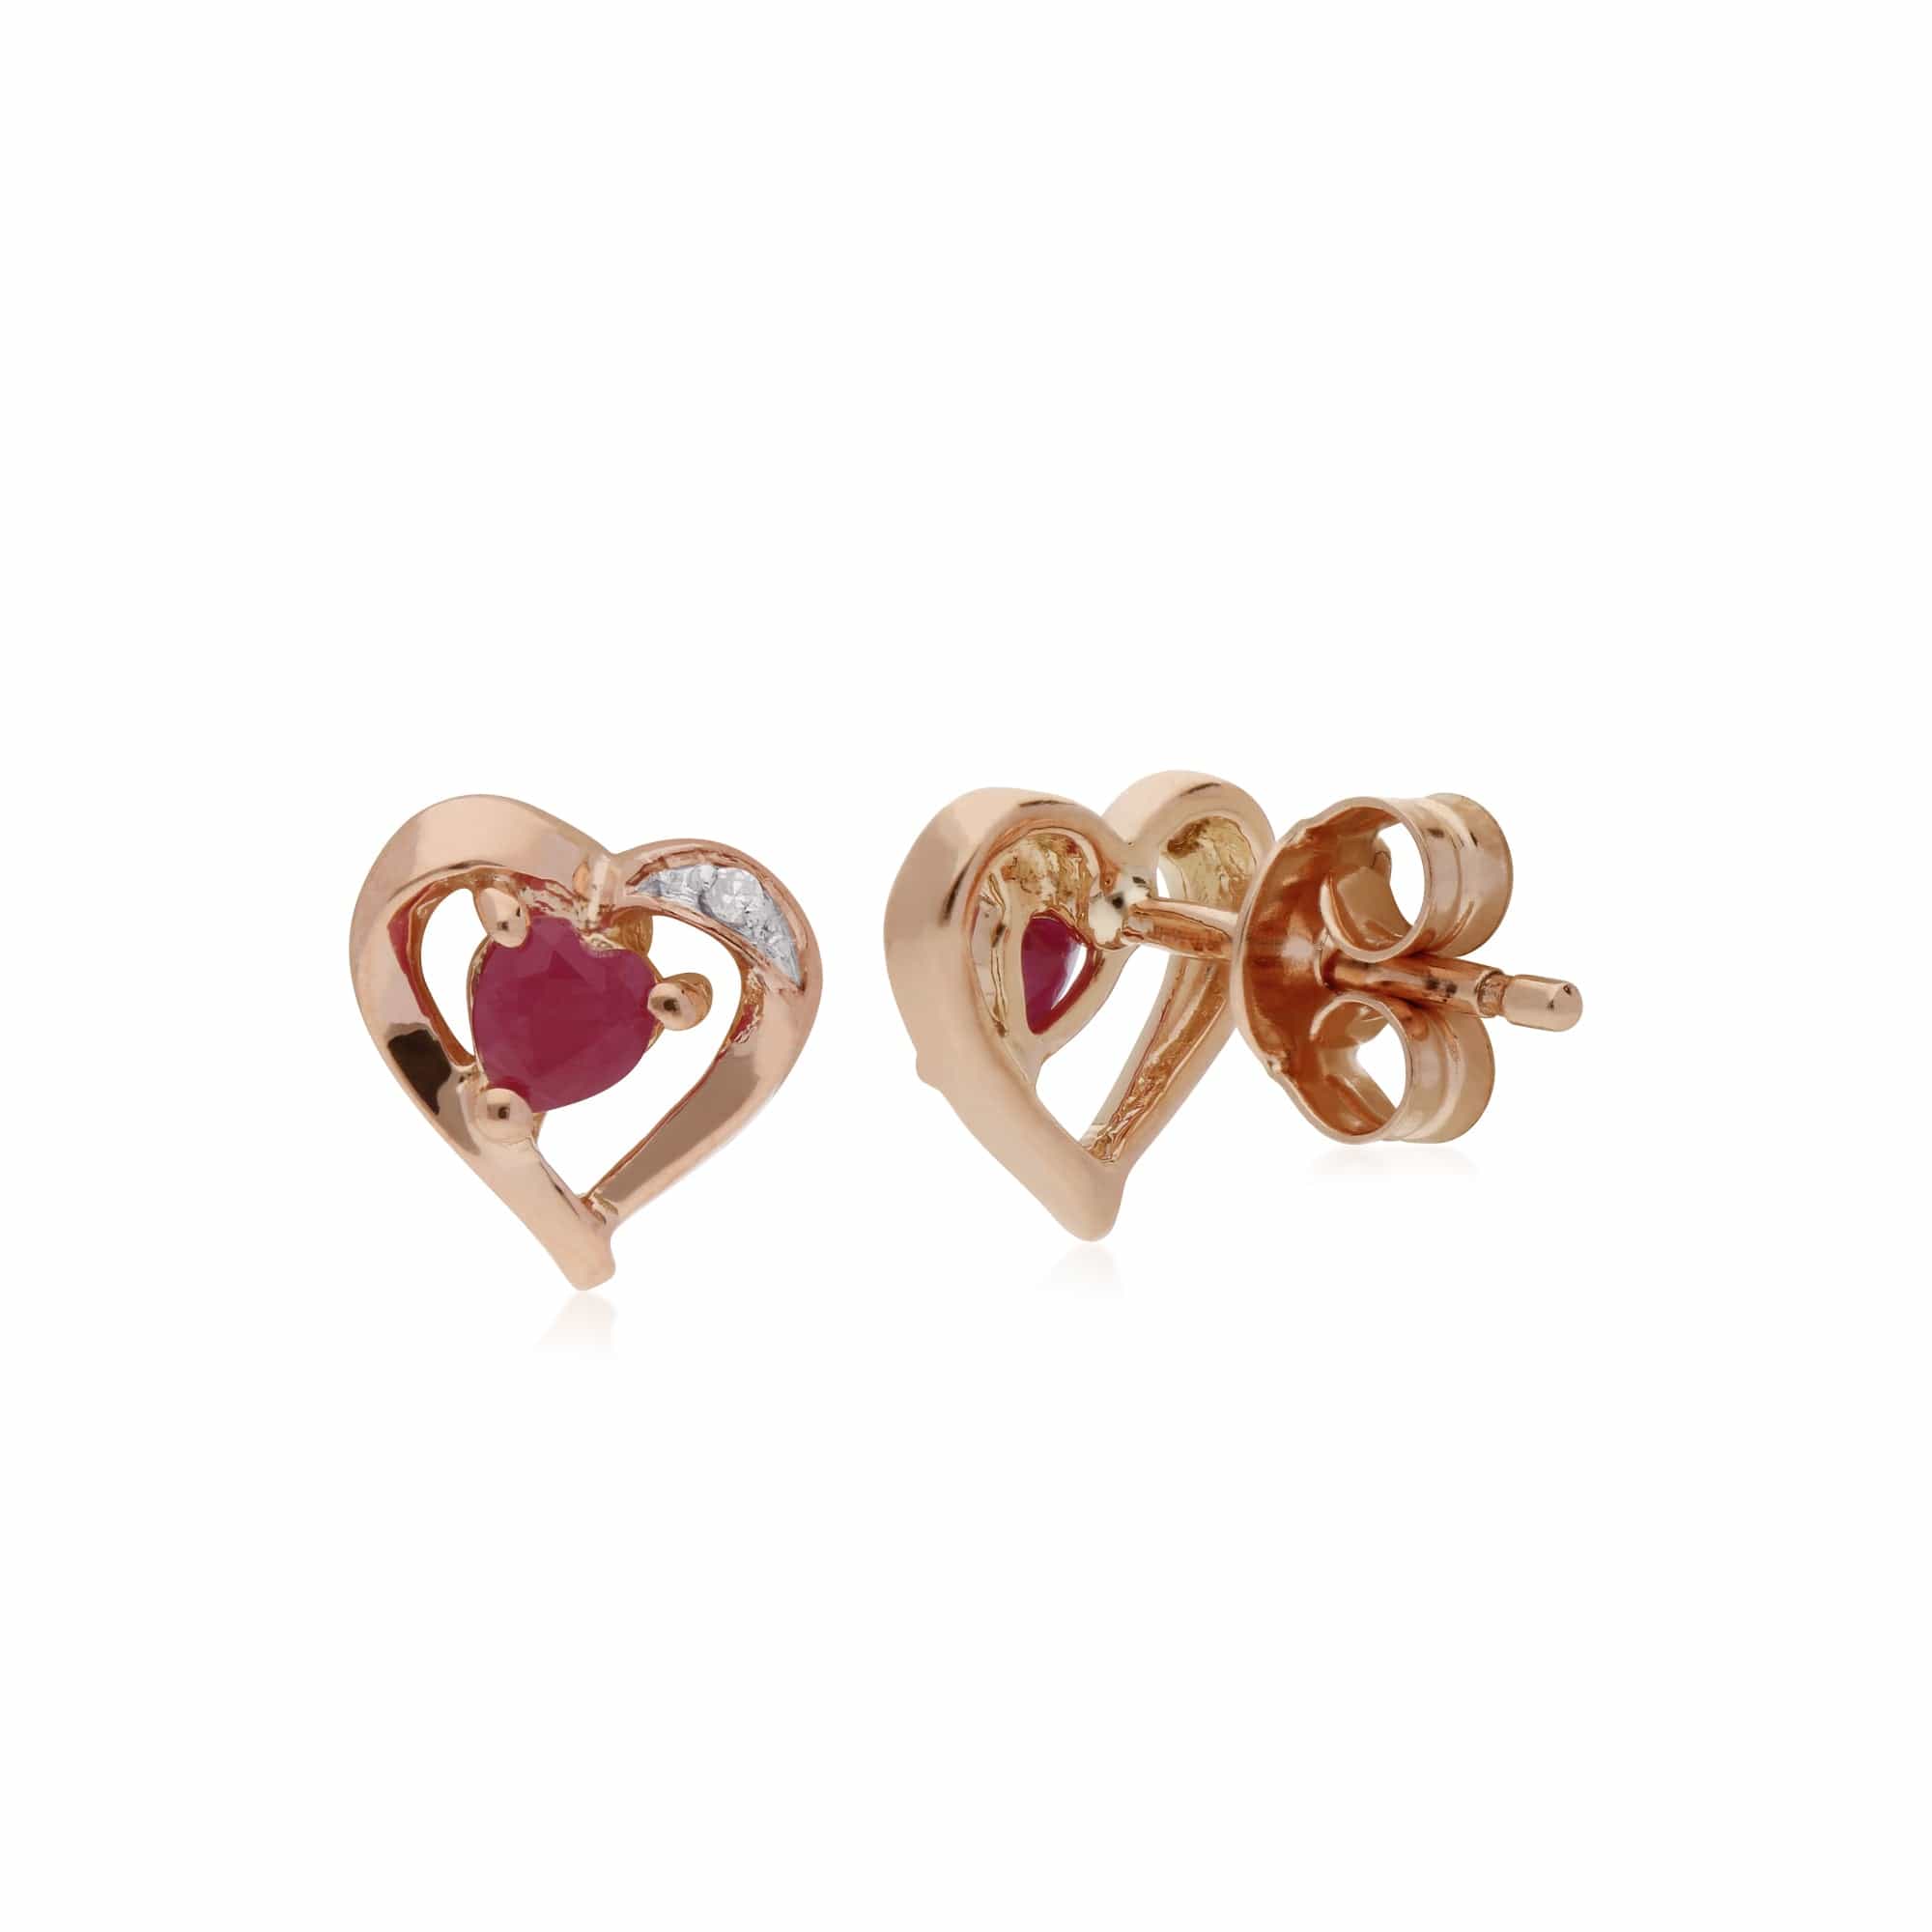 135E1493019 Classic Heart Ruby & Diamond Love Heart Stud Earrings in 9ct Rose Gold 2